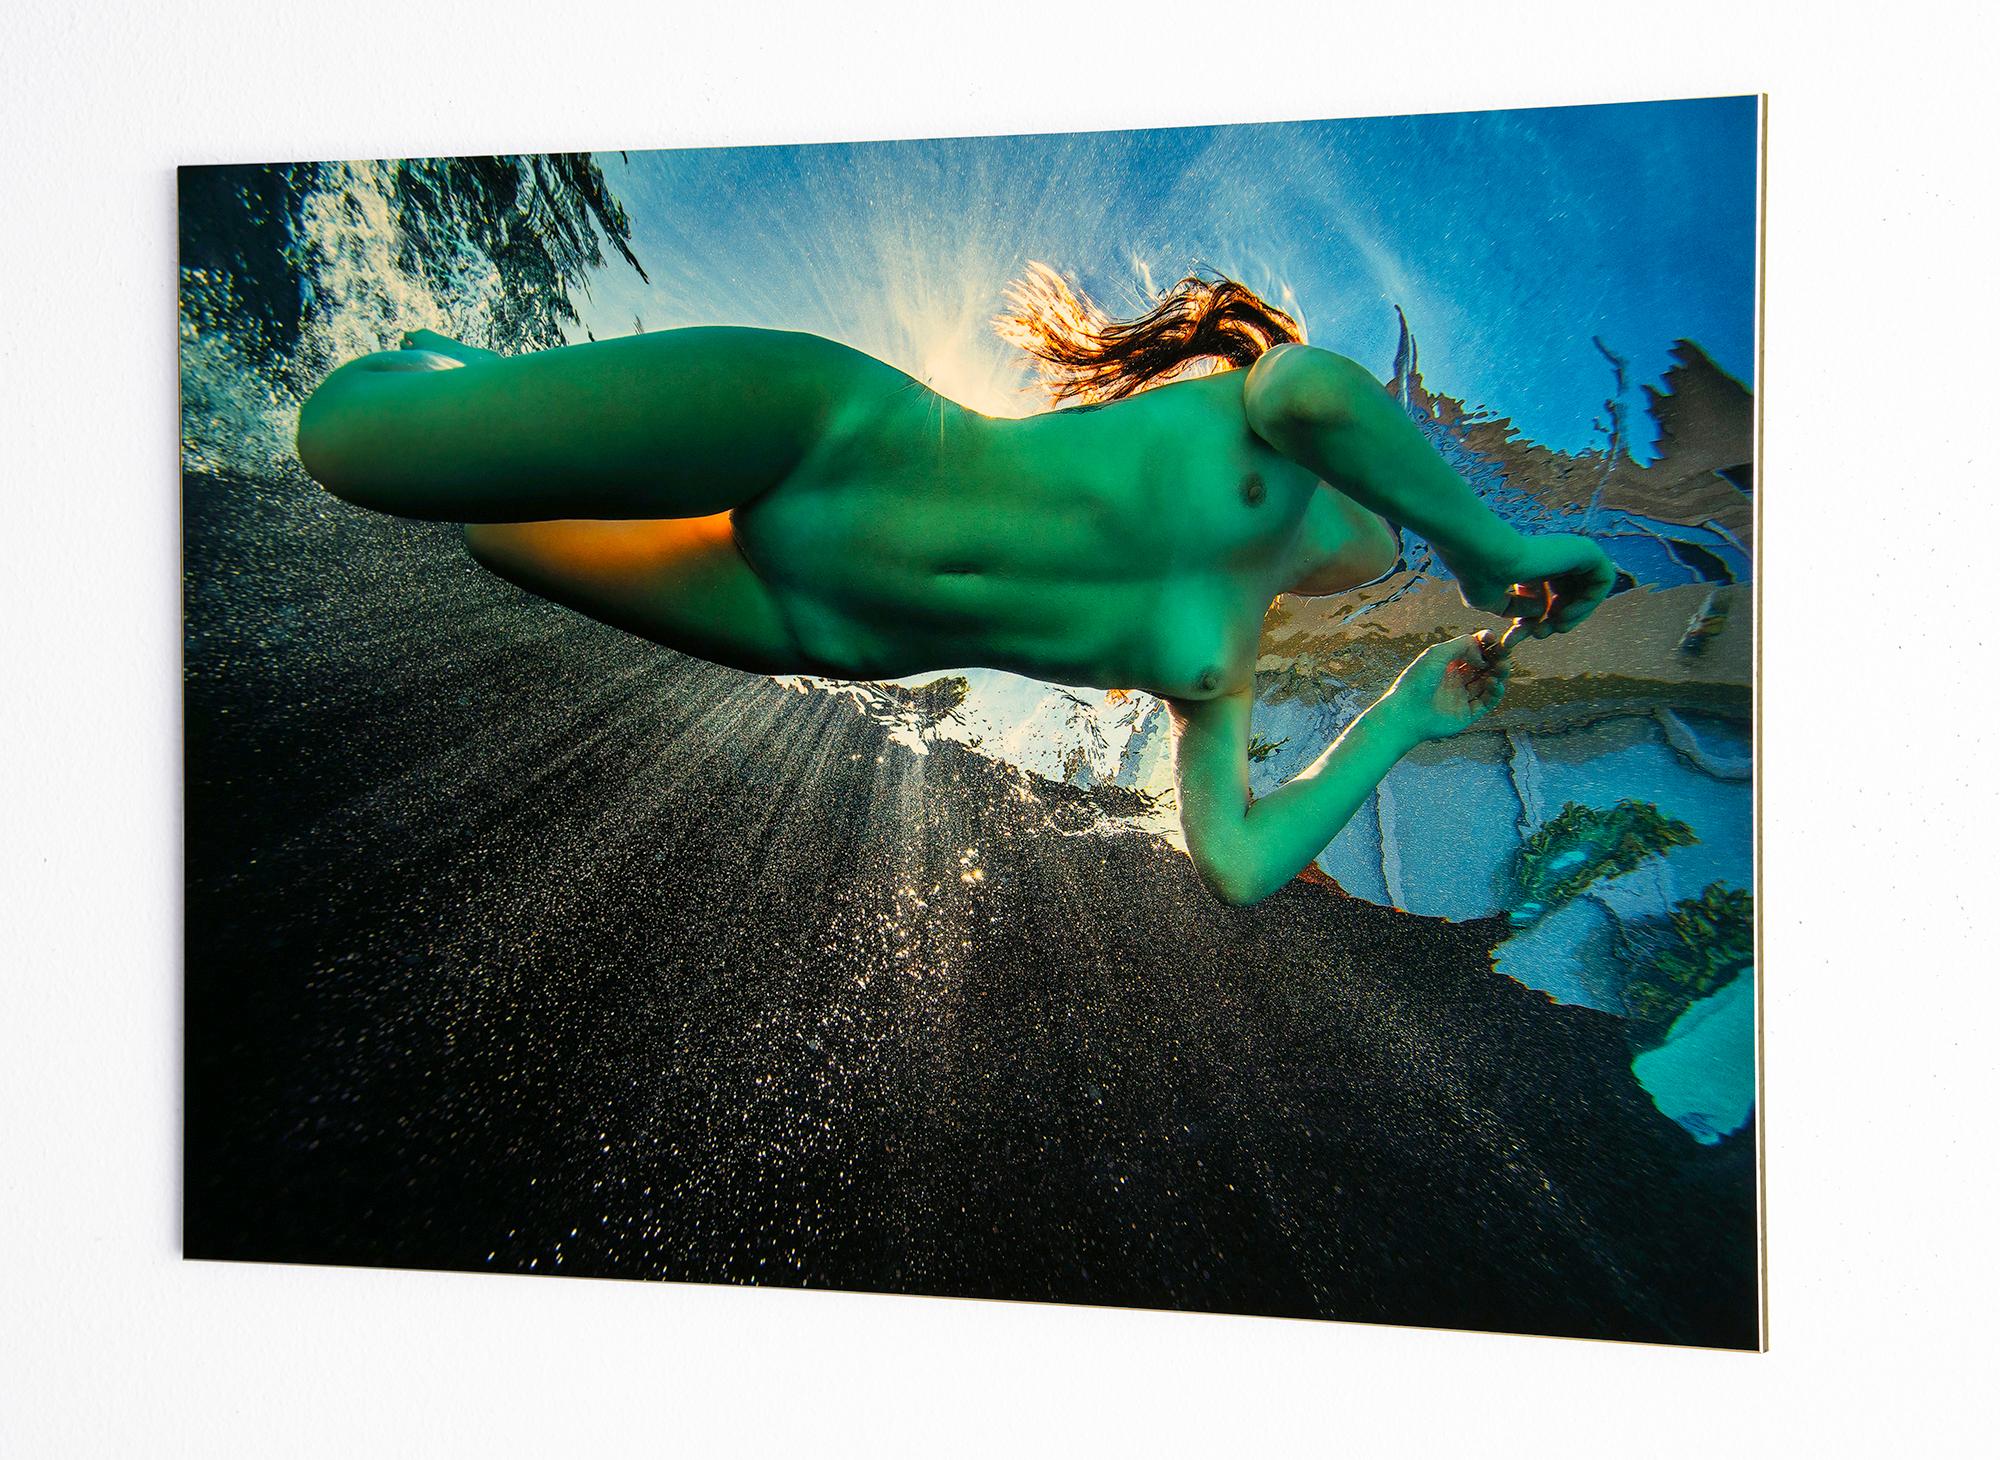 The Real Mermaid - underwater nude photograph - print on aluminum 24